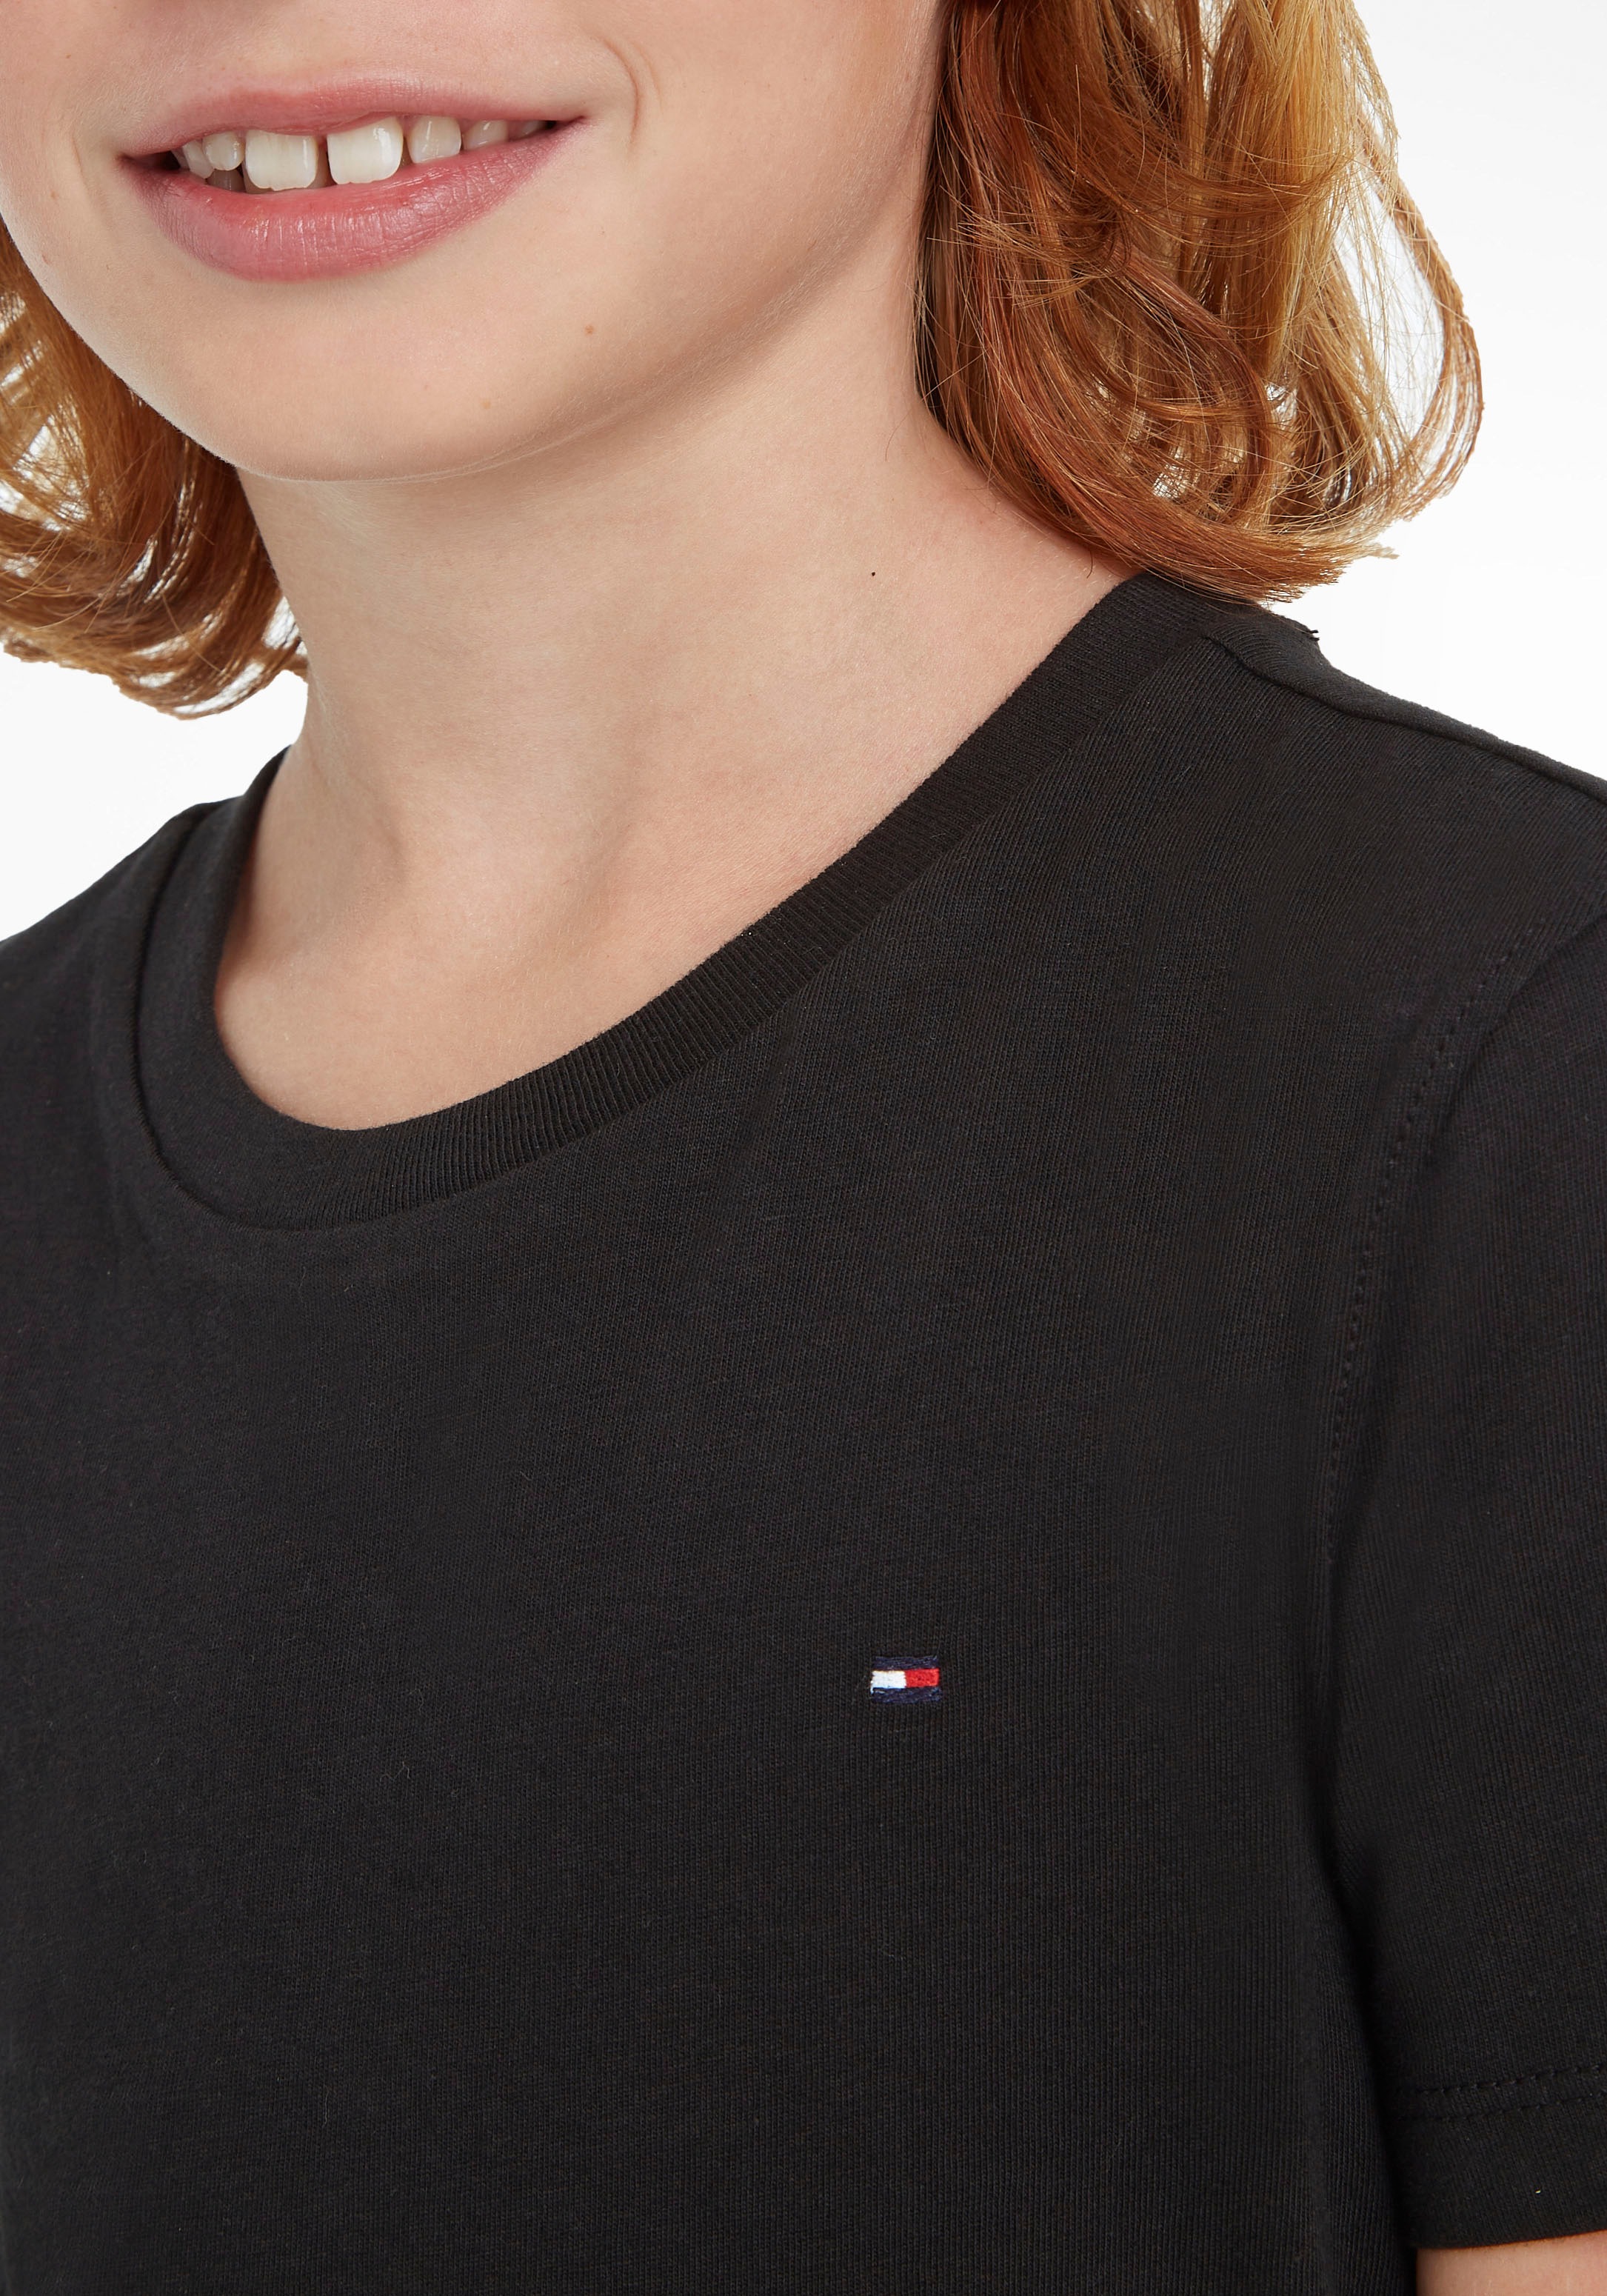 Tommy Hilfiger T-Shirt »BOYS BASIC CN KNIT«, Kinder Kids Junior MiniMe,für Jungen